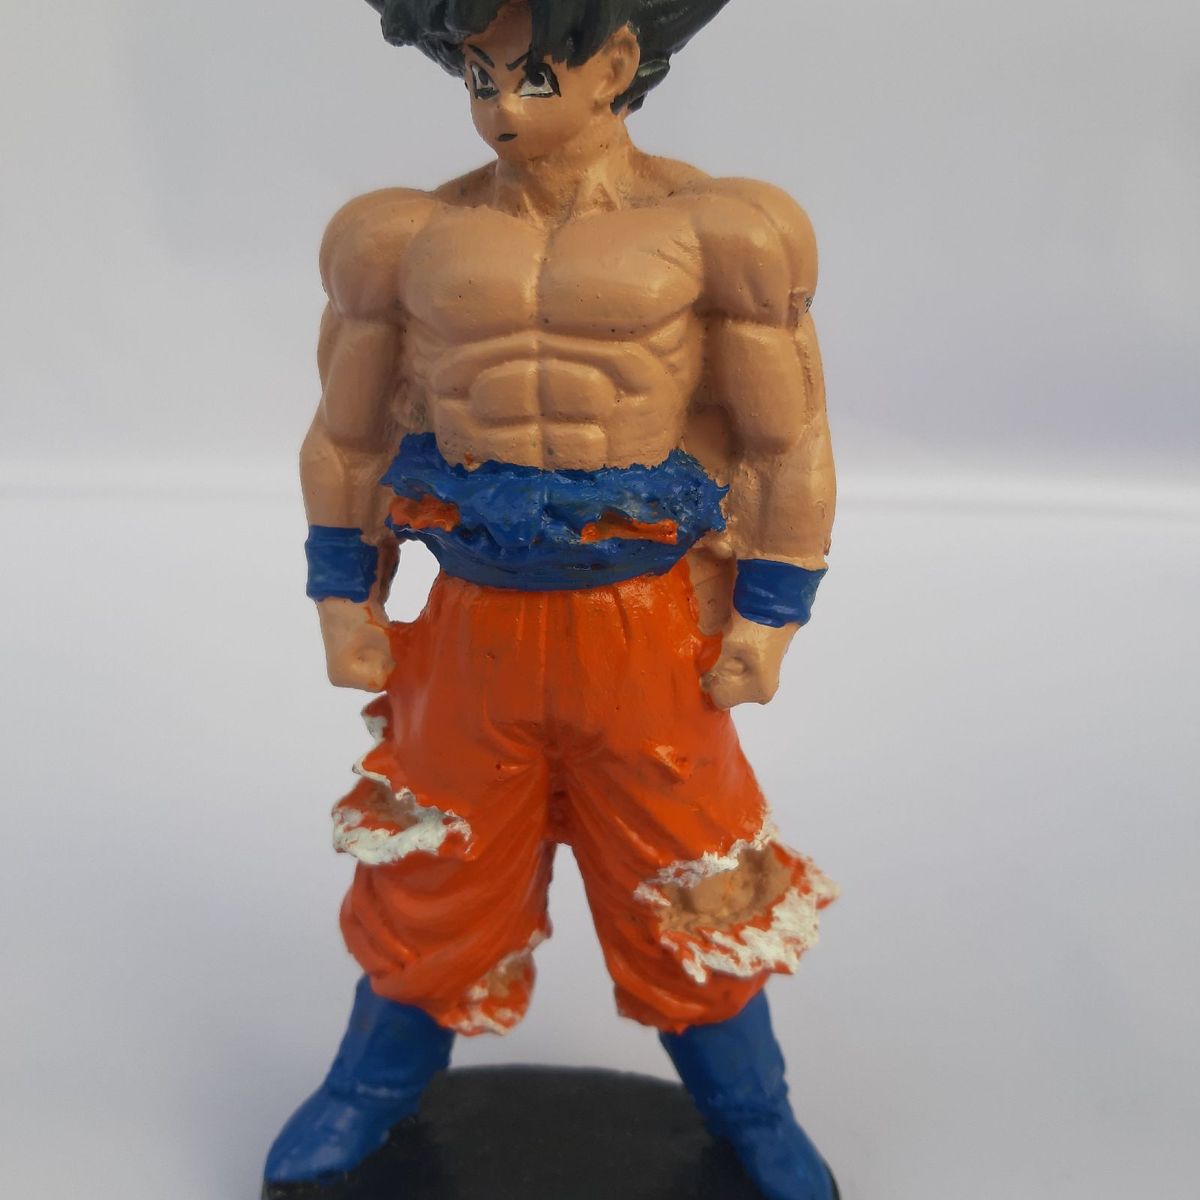 Dragon Ball Super - Goku Ultra Instinto Superior - Grandista